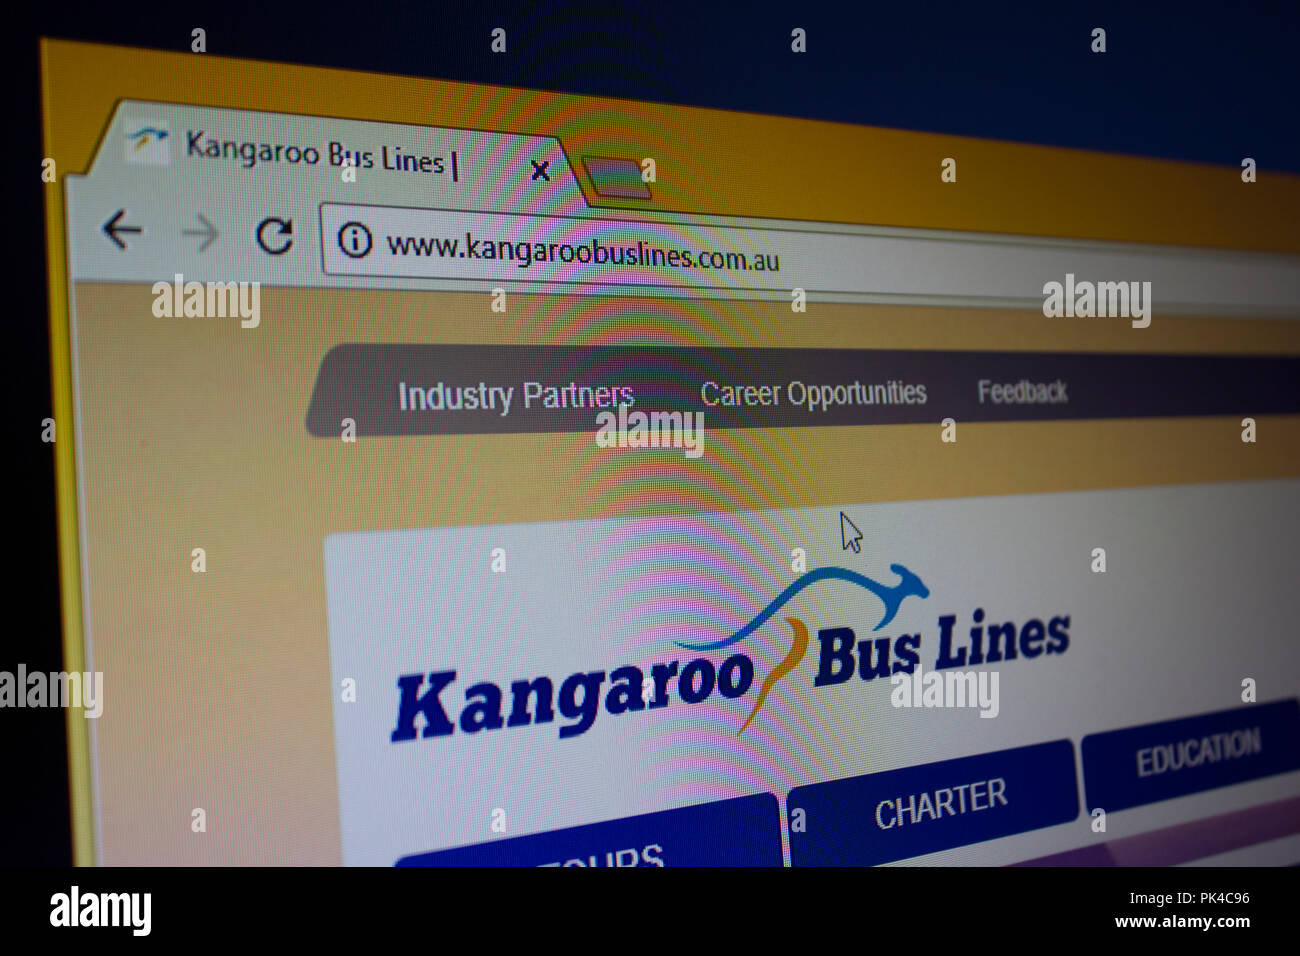 Kangaroo Bus Lines Website Homepage Stock Photo